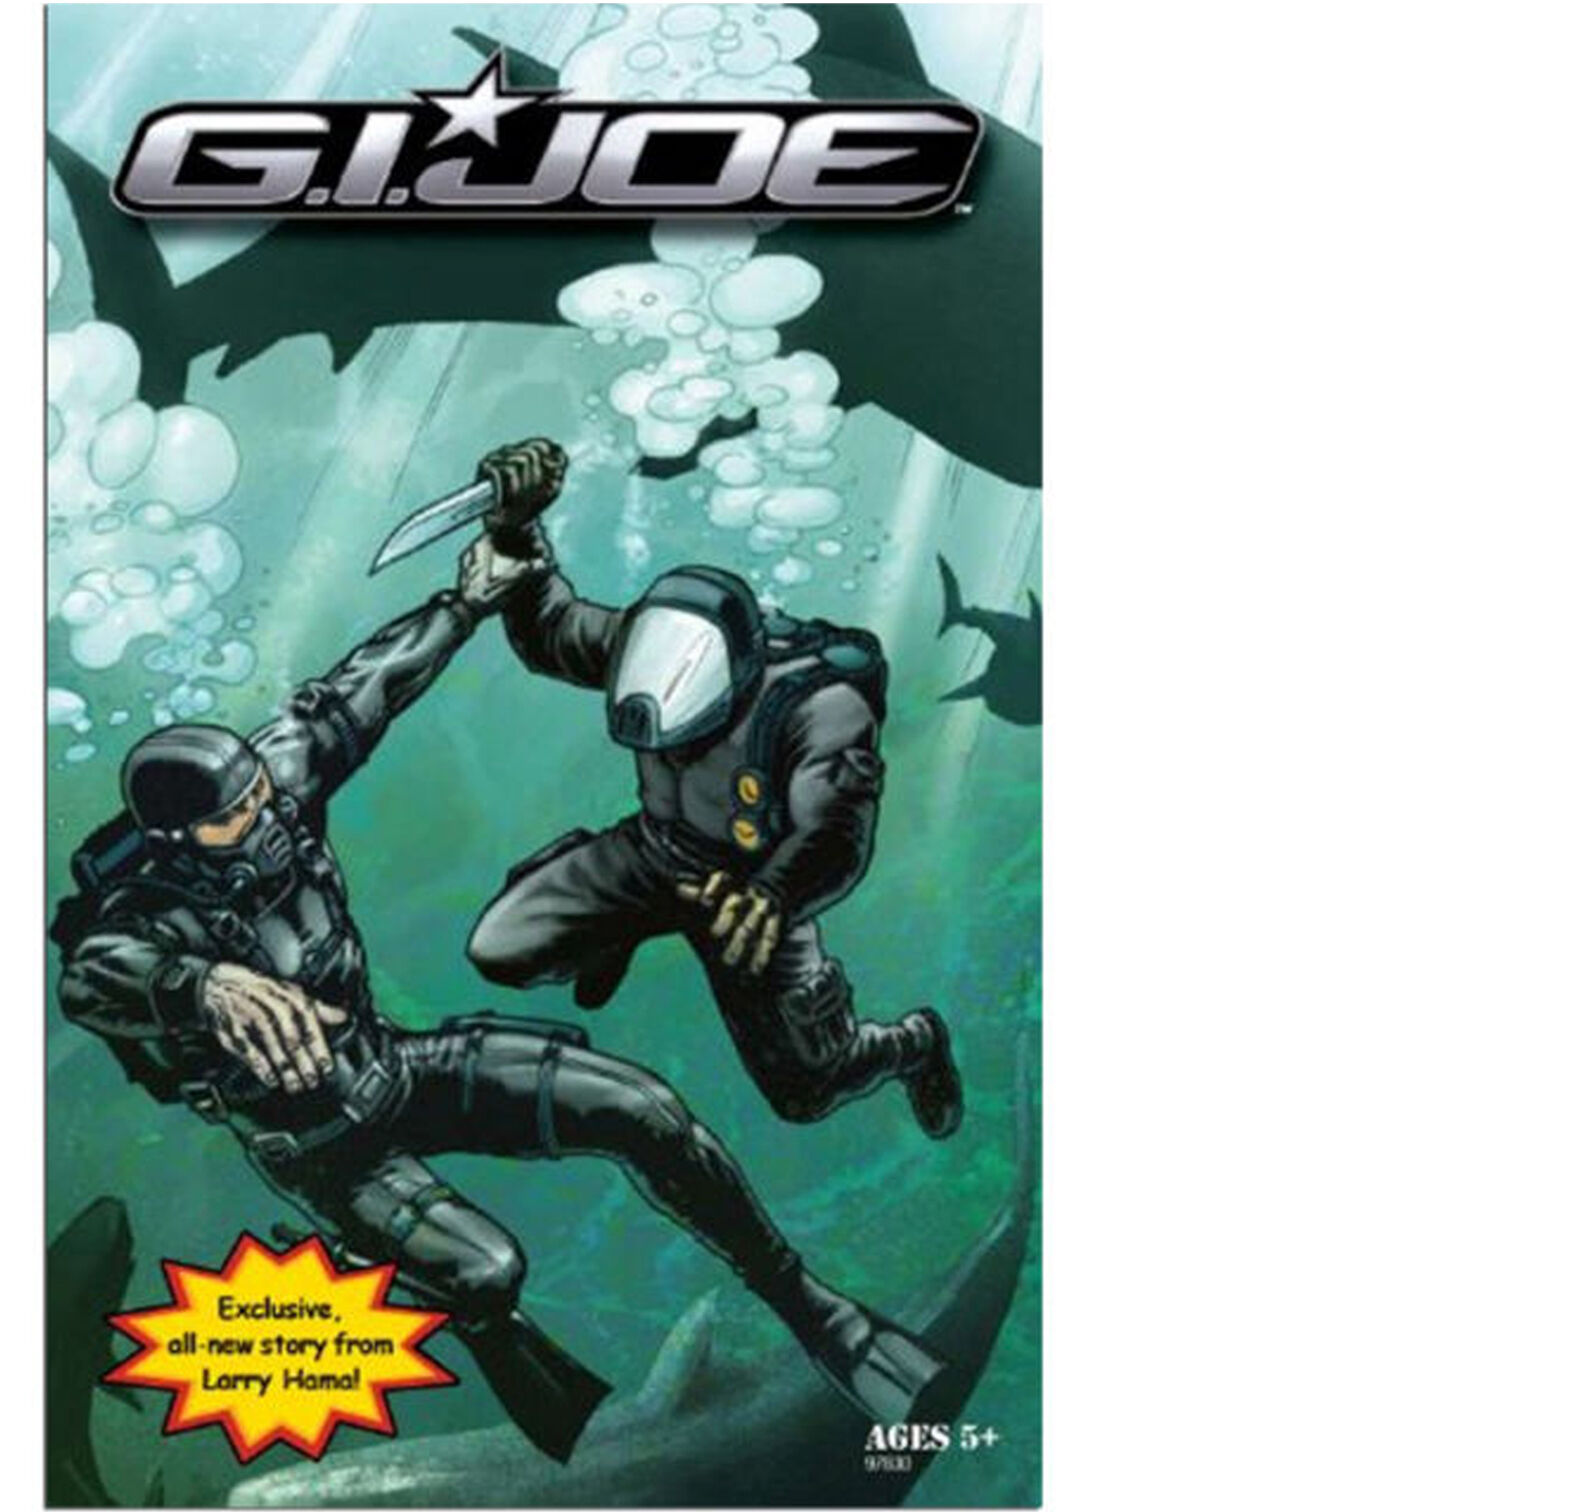 G.I. GI Joe vs. Cobra Exclusive Duke Comic Comics Book Classic 80s Stories